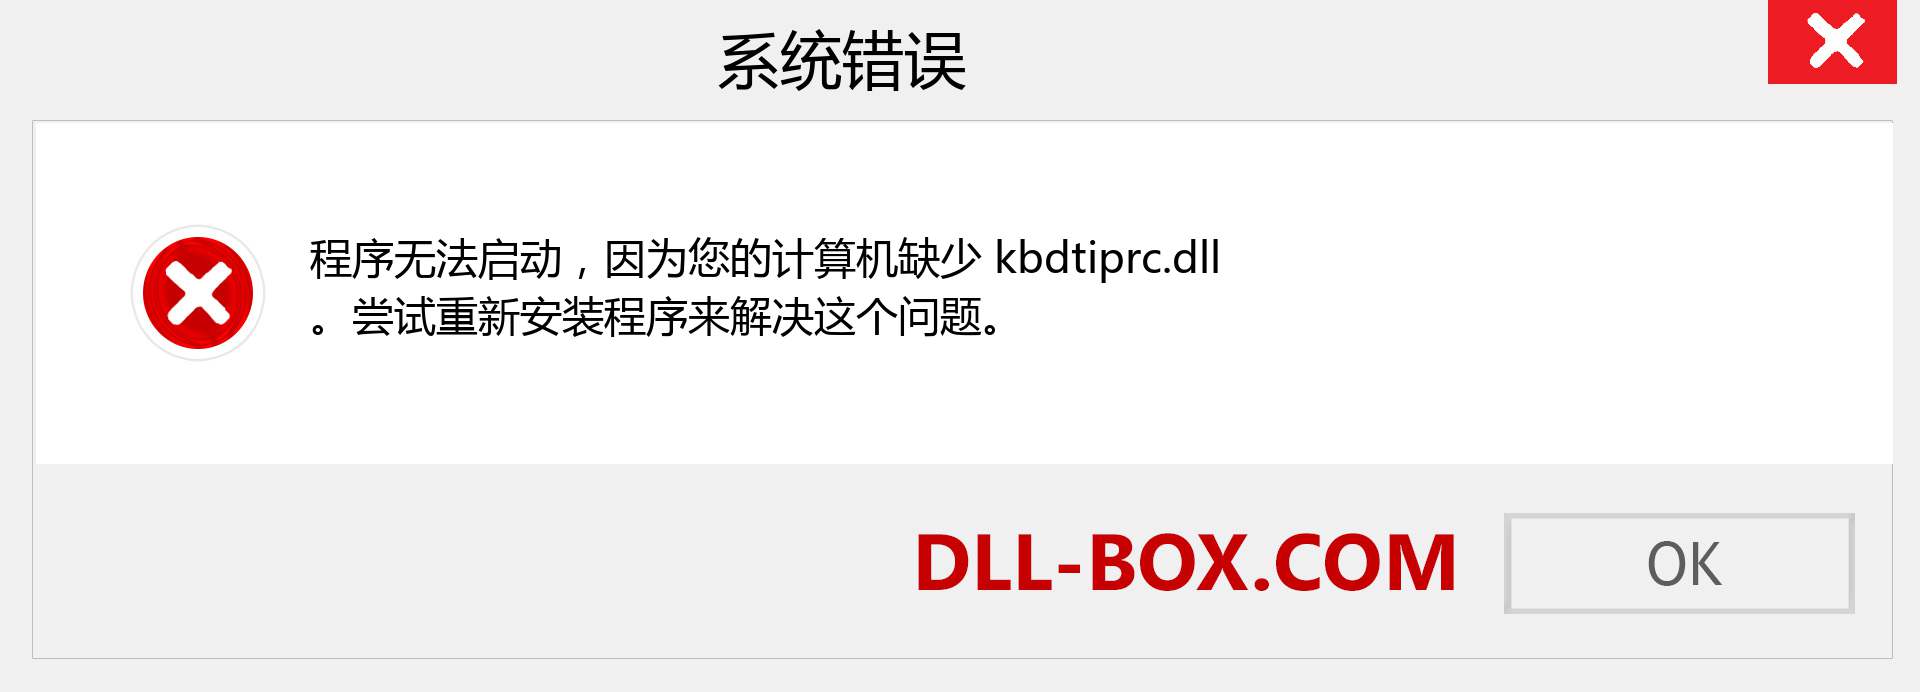 kbdtiprc.dll 文件丢失？。 适用于 Windows 7、8、10 的下载 - 修复 Windows、照片、图像上的 kbdtiprc dll 丢失错误